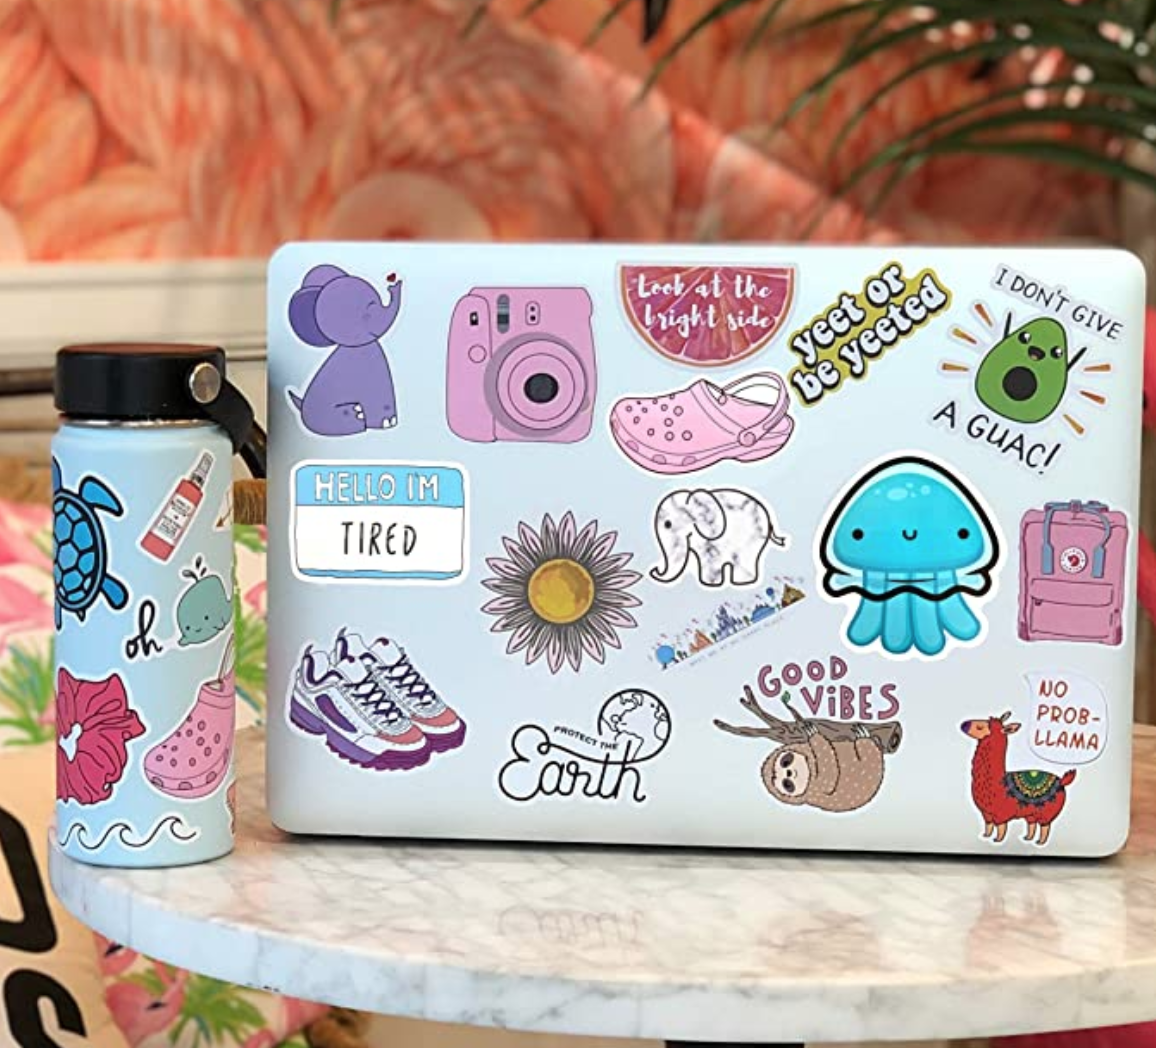 El Nido 100 Pink Stickers, Aesthetic Stickers, Cute Stickers, Laptop Stickers, Vinyl Stickers, Stickers for Water Bottles, Waterproof Stickers for